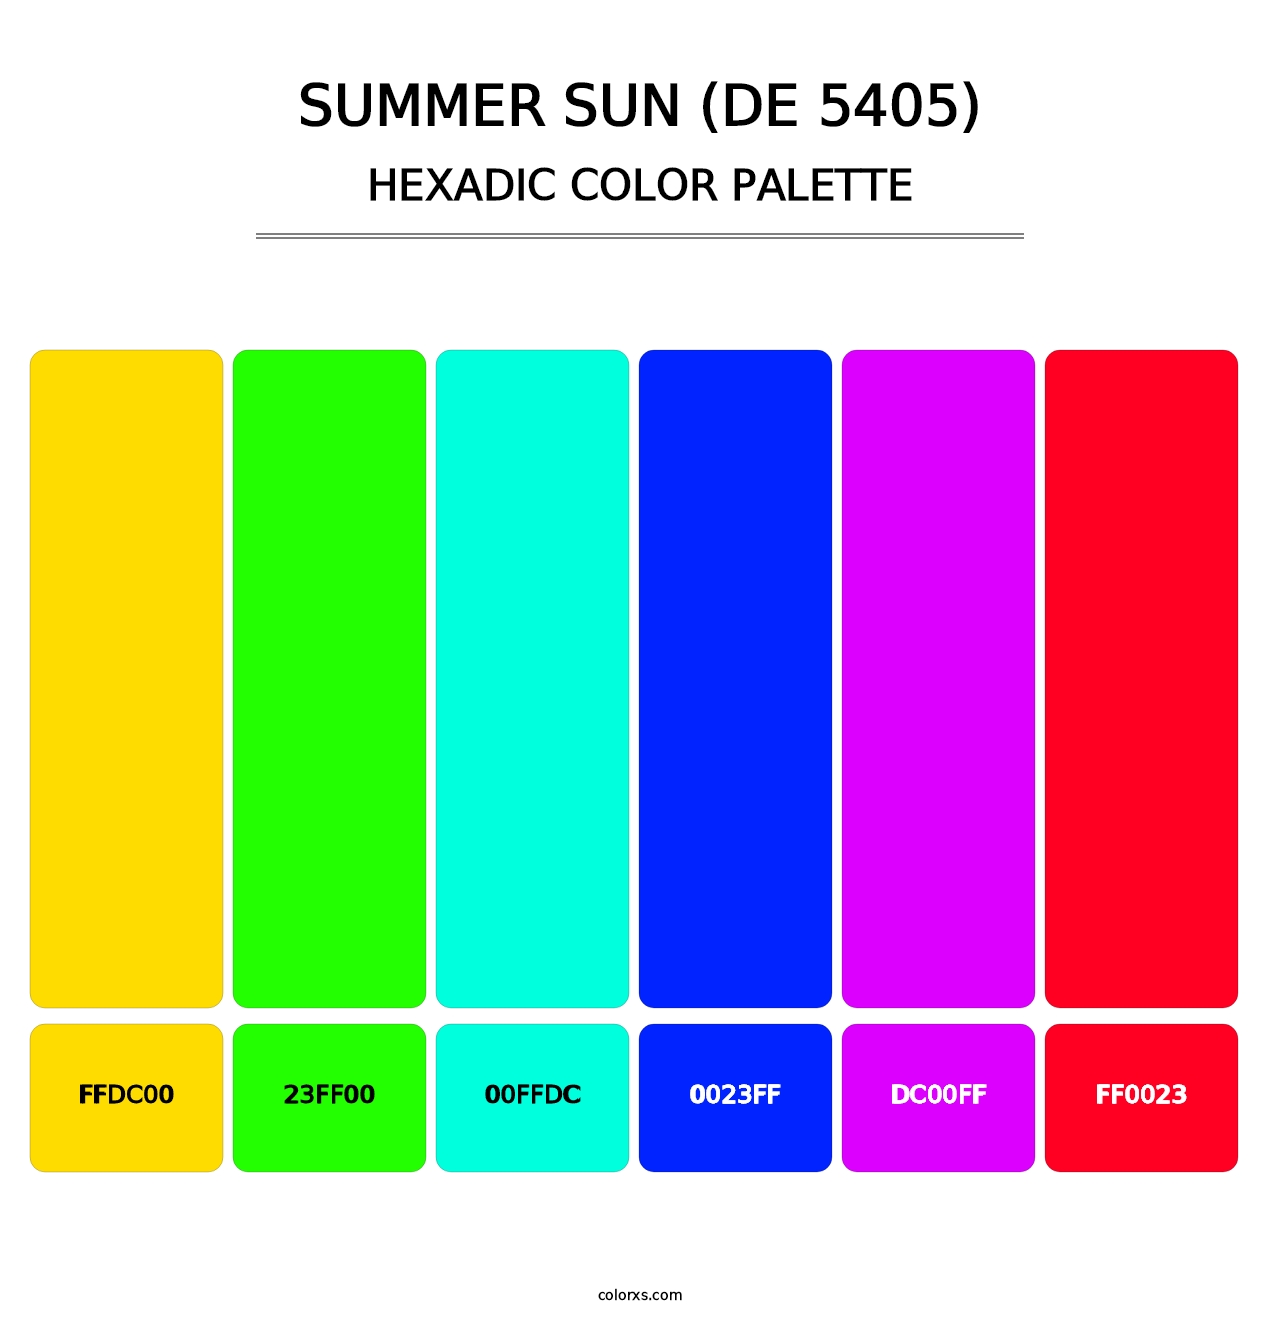 Summer Sun (DE 5405) - Hexadic Color Palette